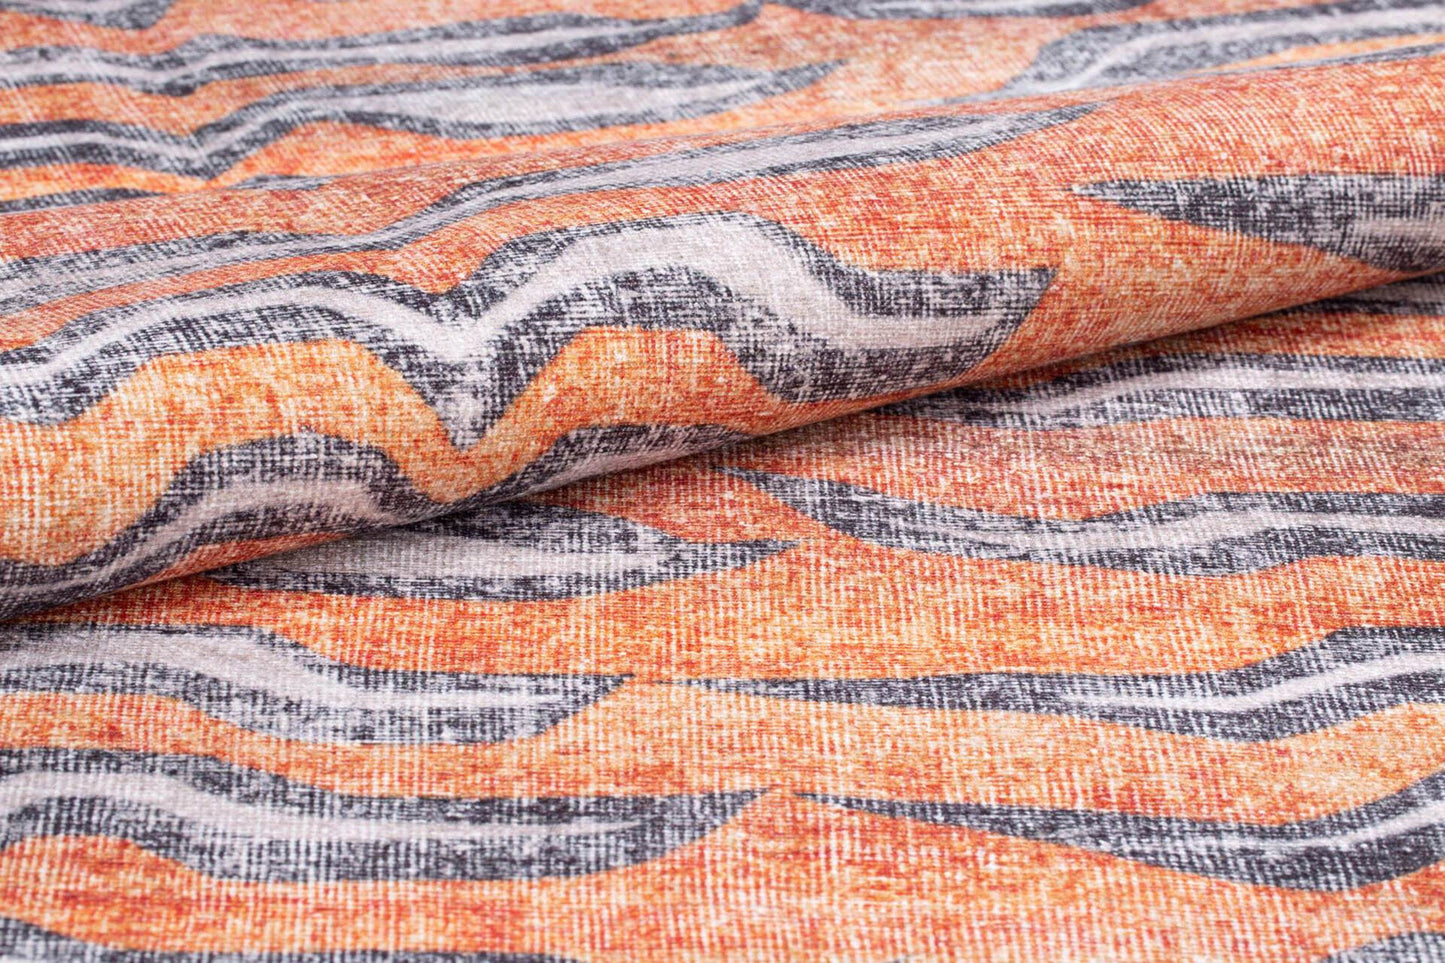 Tayga Orange Distressed Pelt skin stripe Rug